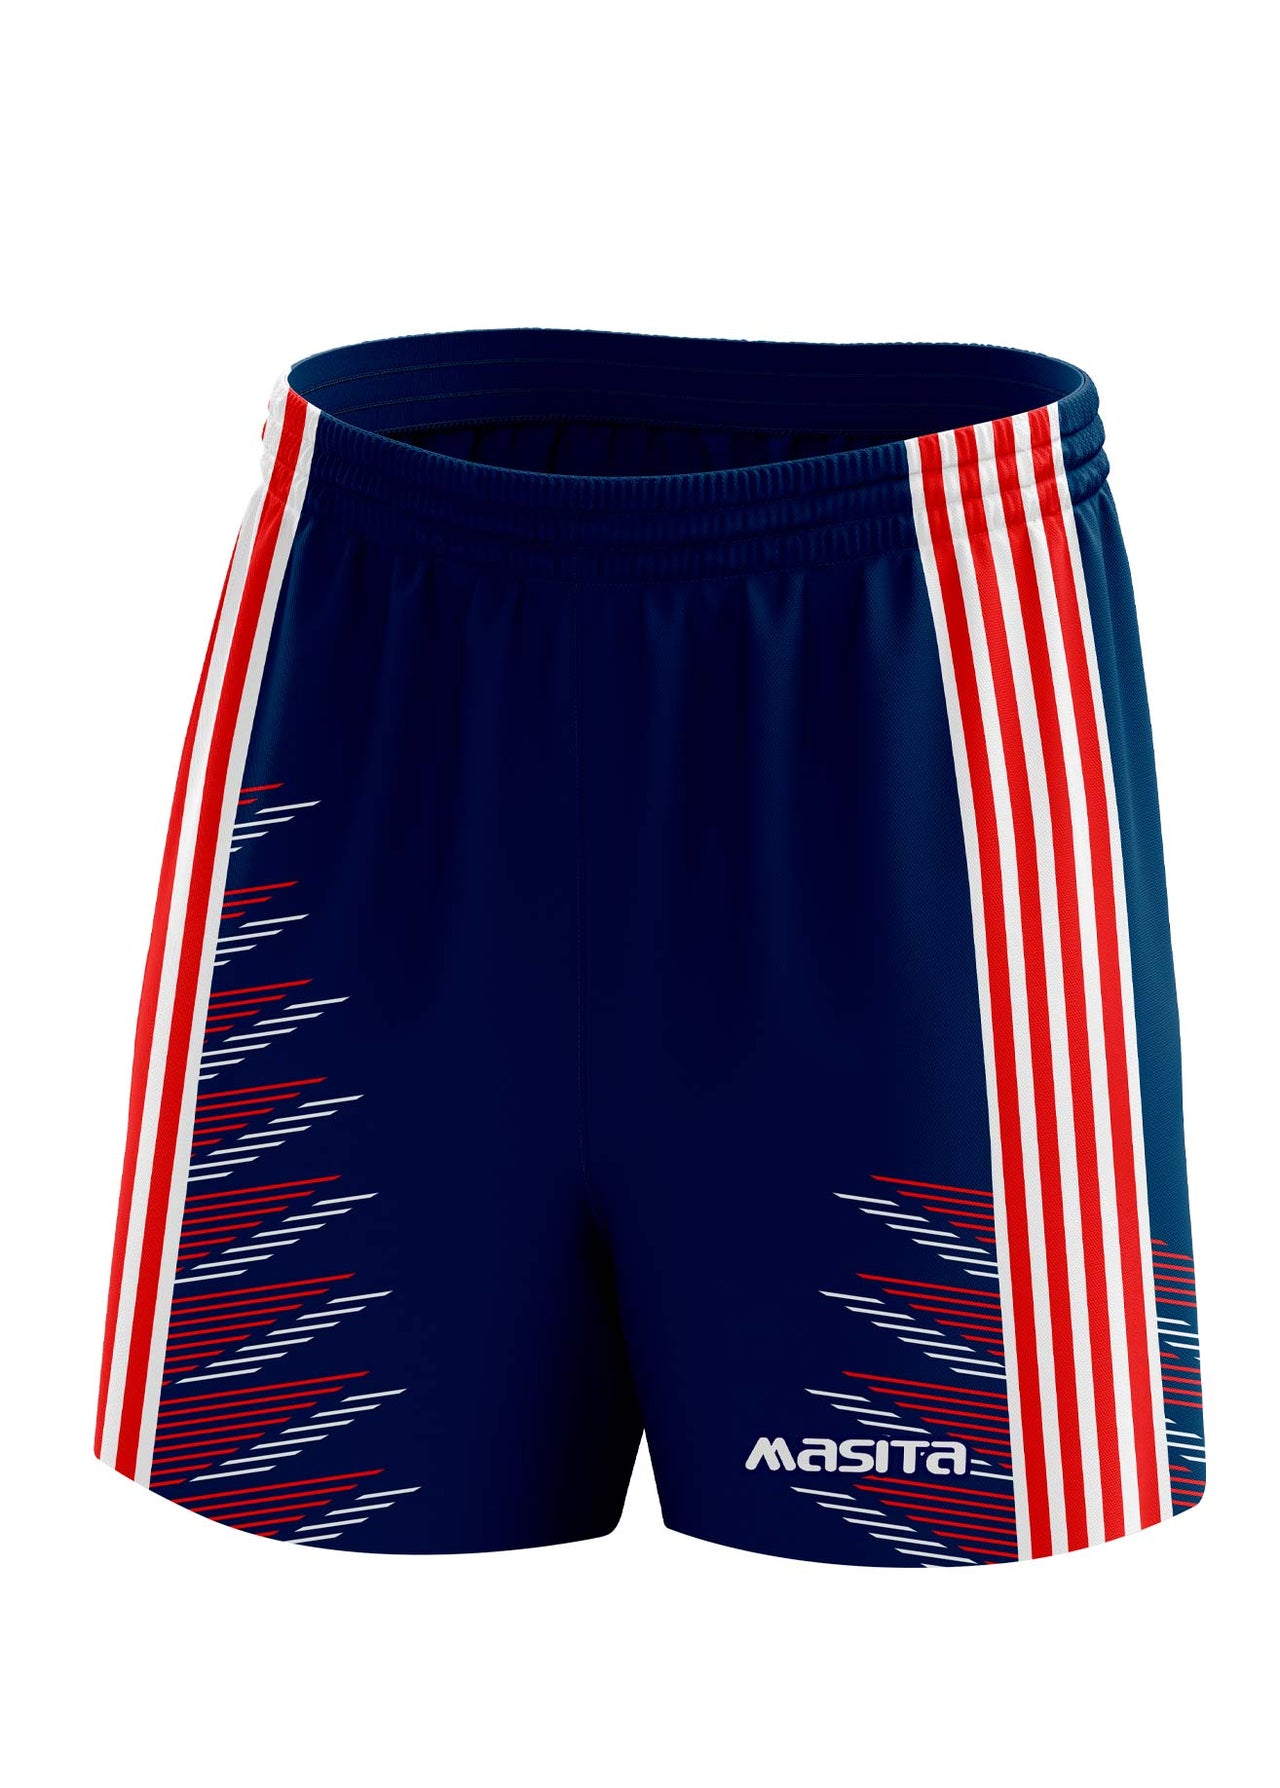 Hydro Gaelic Shorts Navy/Red/White Adult